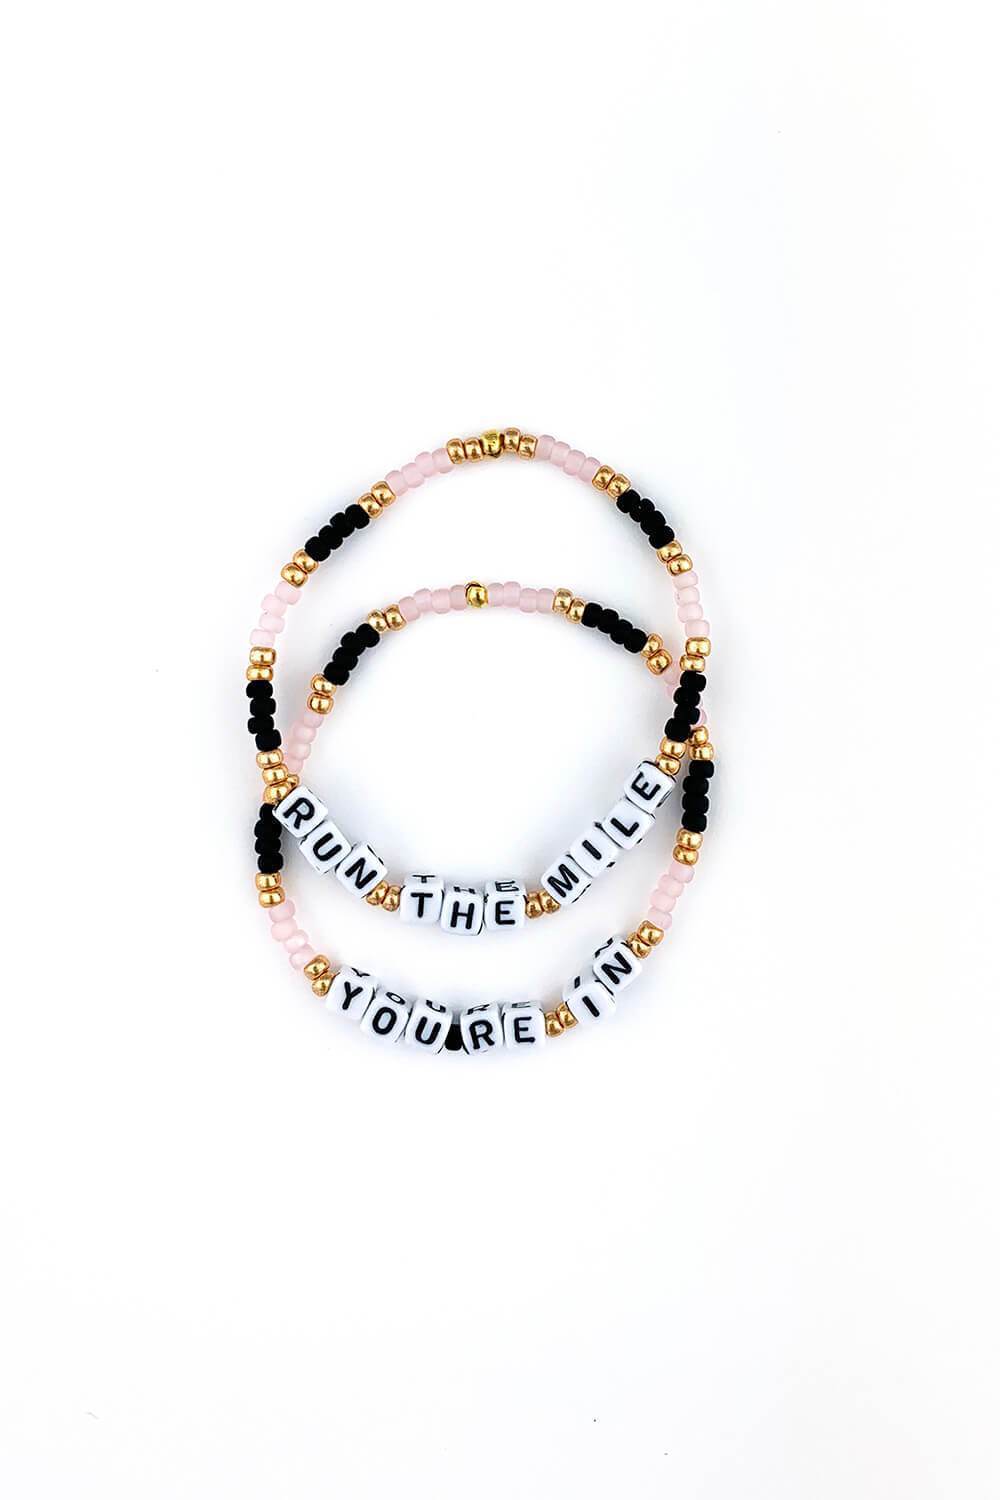 Sarah Marie Design Studio Bracelet 6.25" / Pink Dusk Run The Mile You're In Bracelet